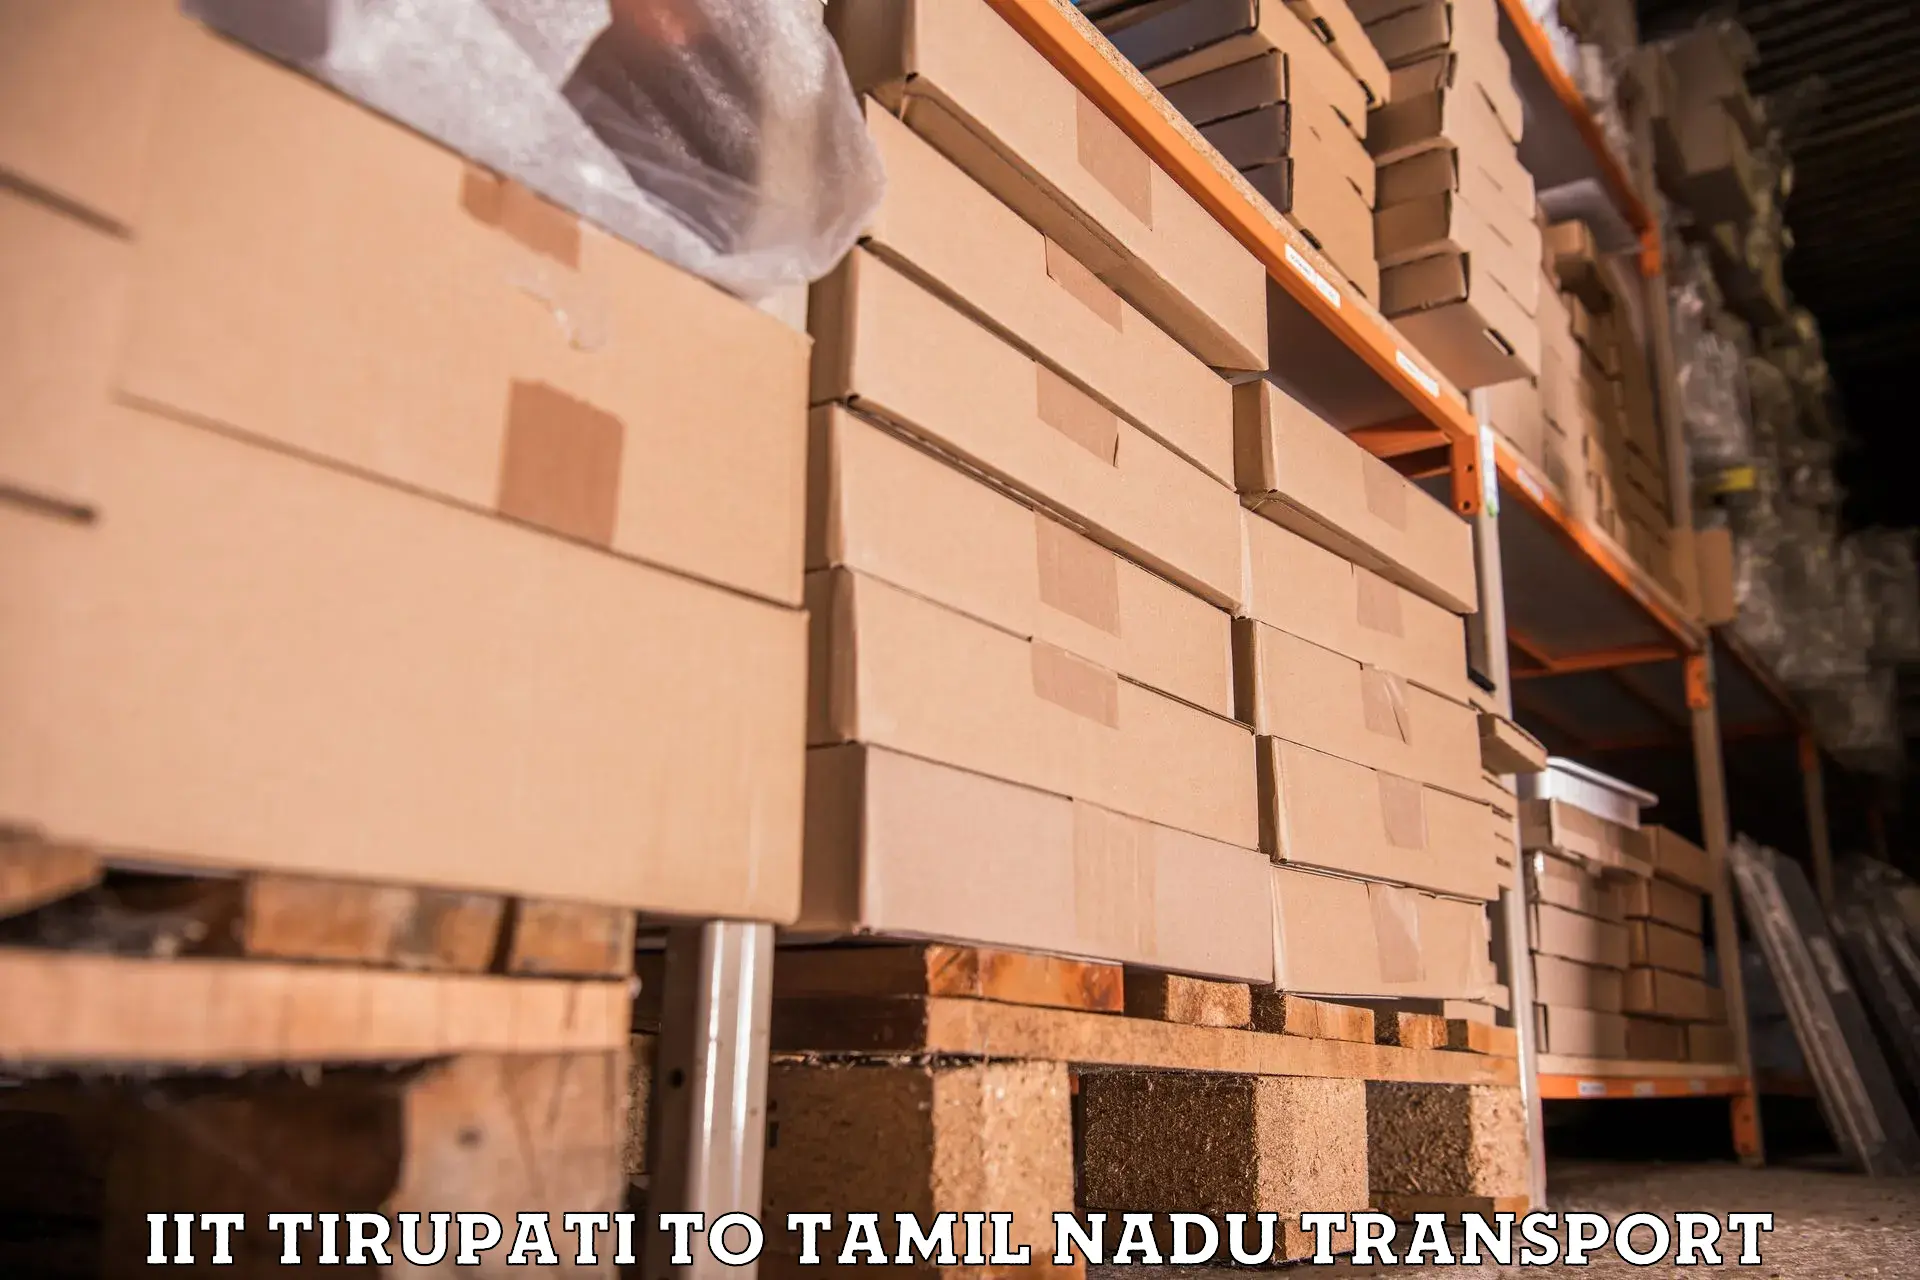 Delivery service IIT Tirupati to Tirupur